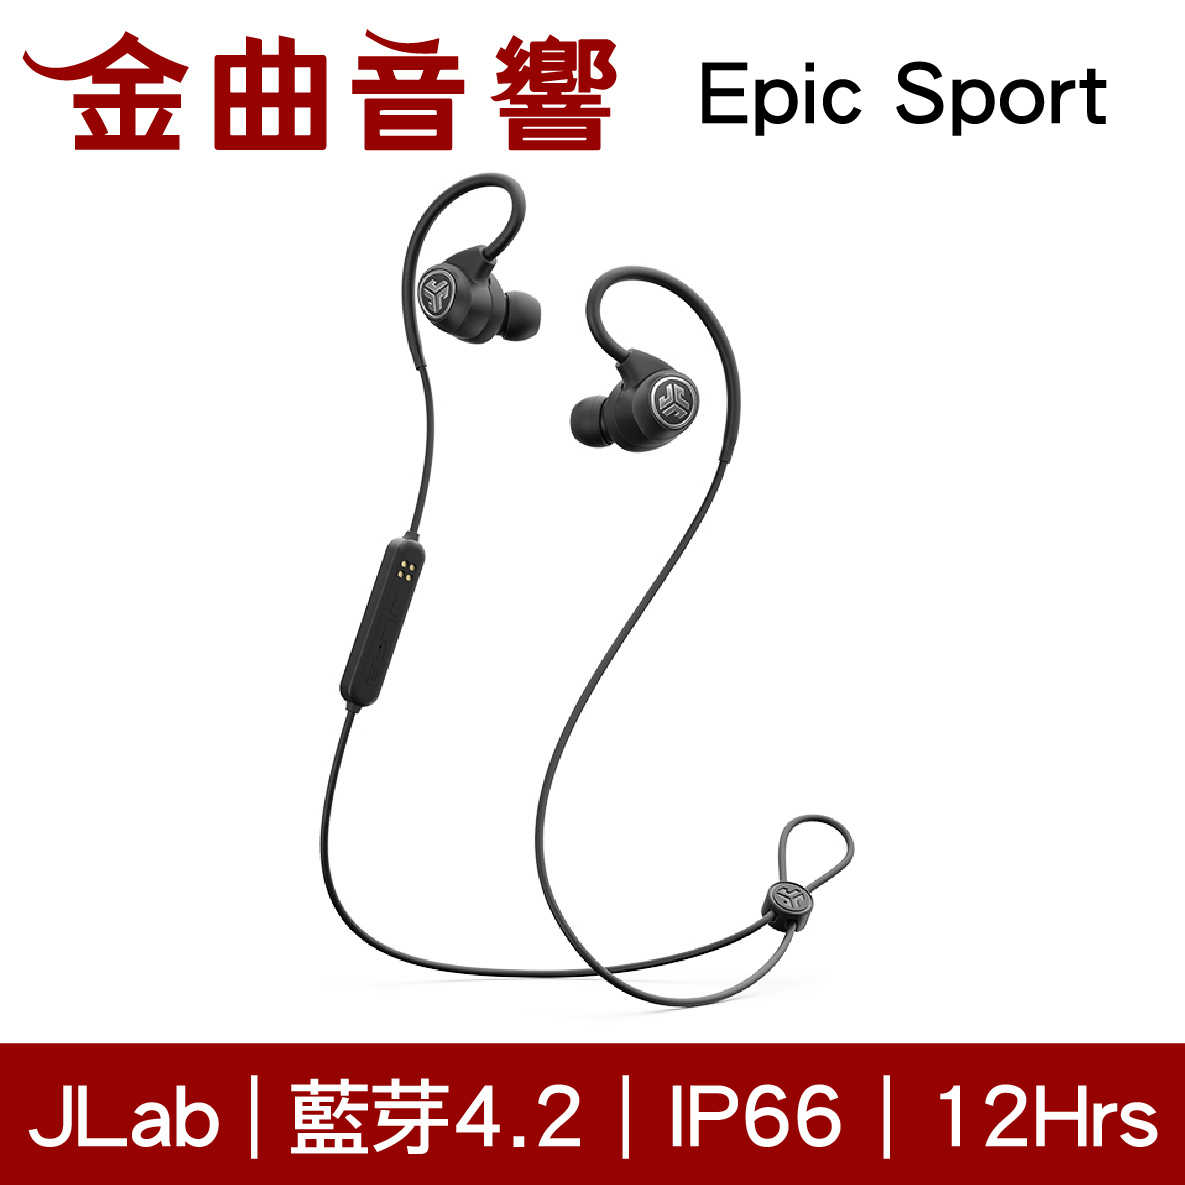 帶品 JLab Epic Sport